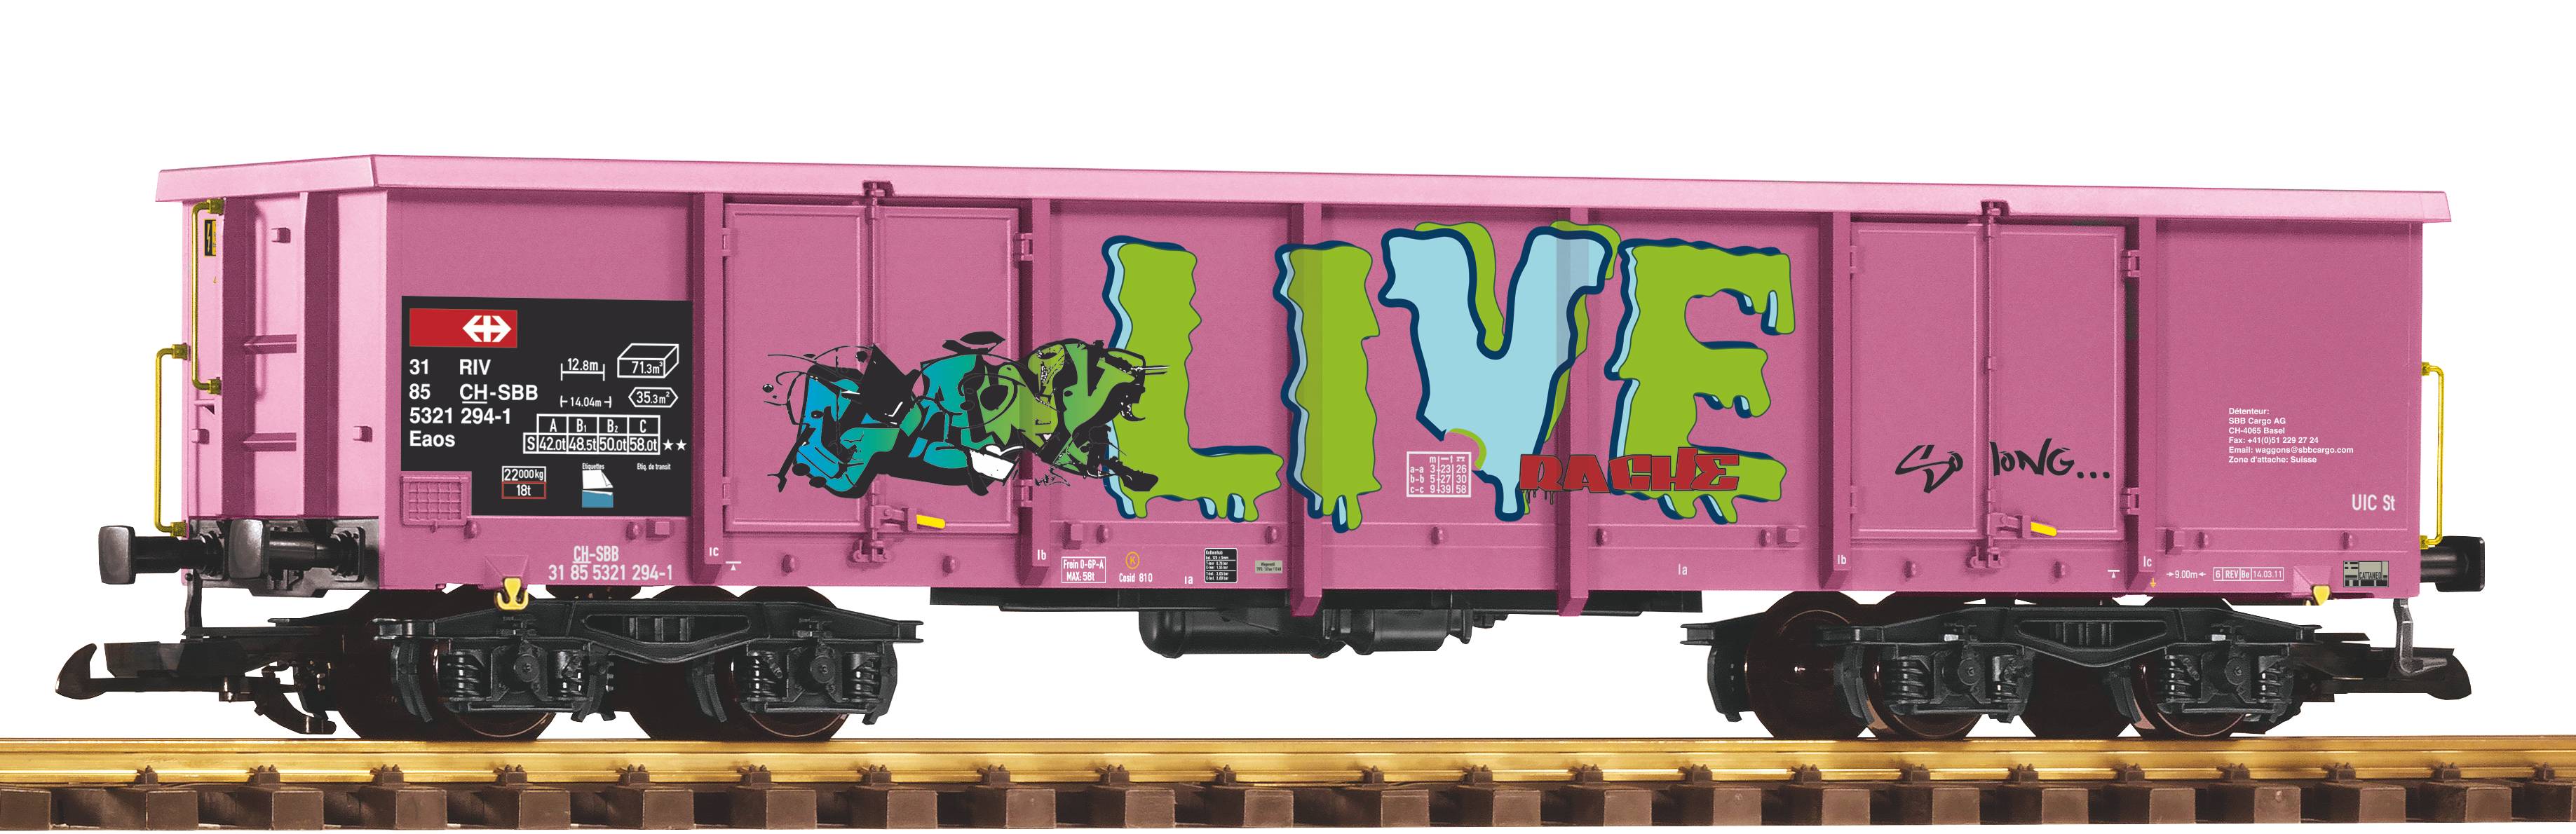 SBB offener Güterwagen Eaos Ep.V mit Graffiti